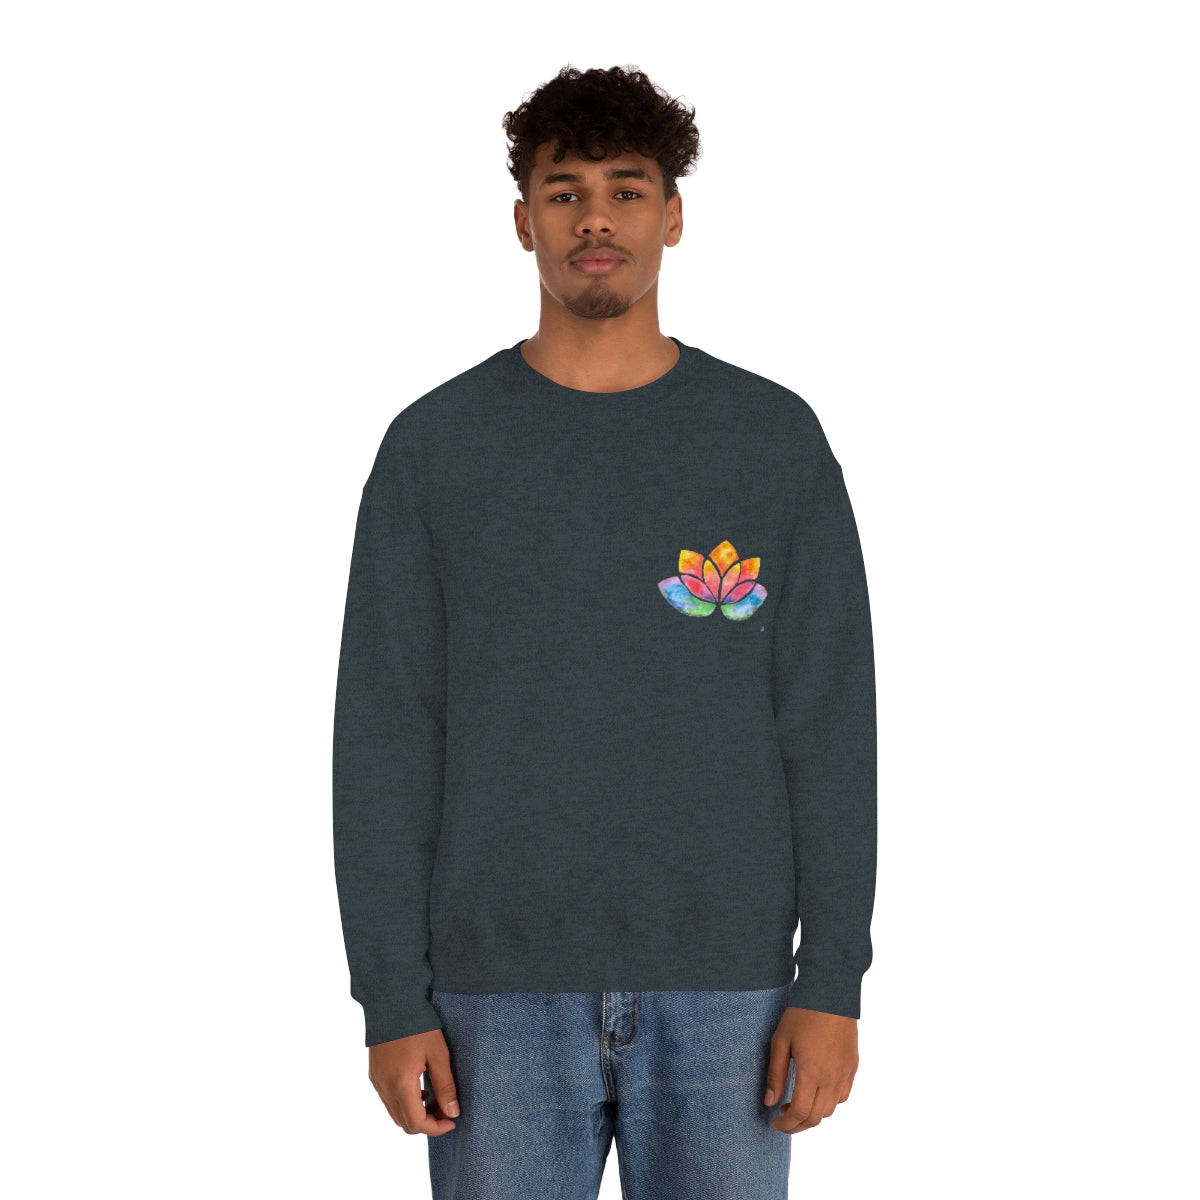 Watercolour Lotus | Yoga Sweater | Unisex Heavy Blend™ Crewneck Sweatshirt